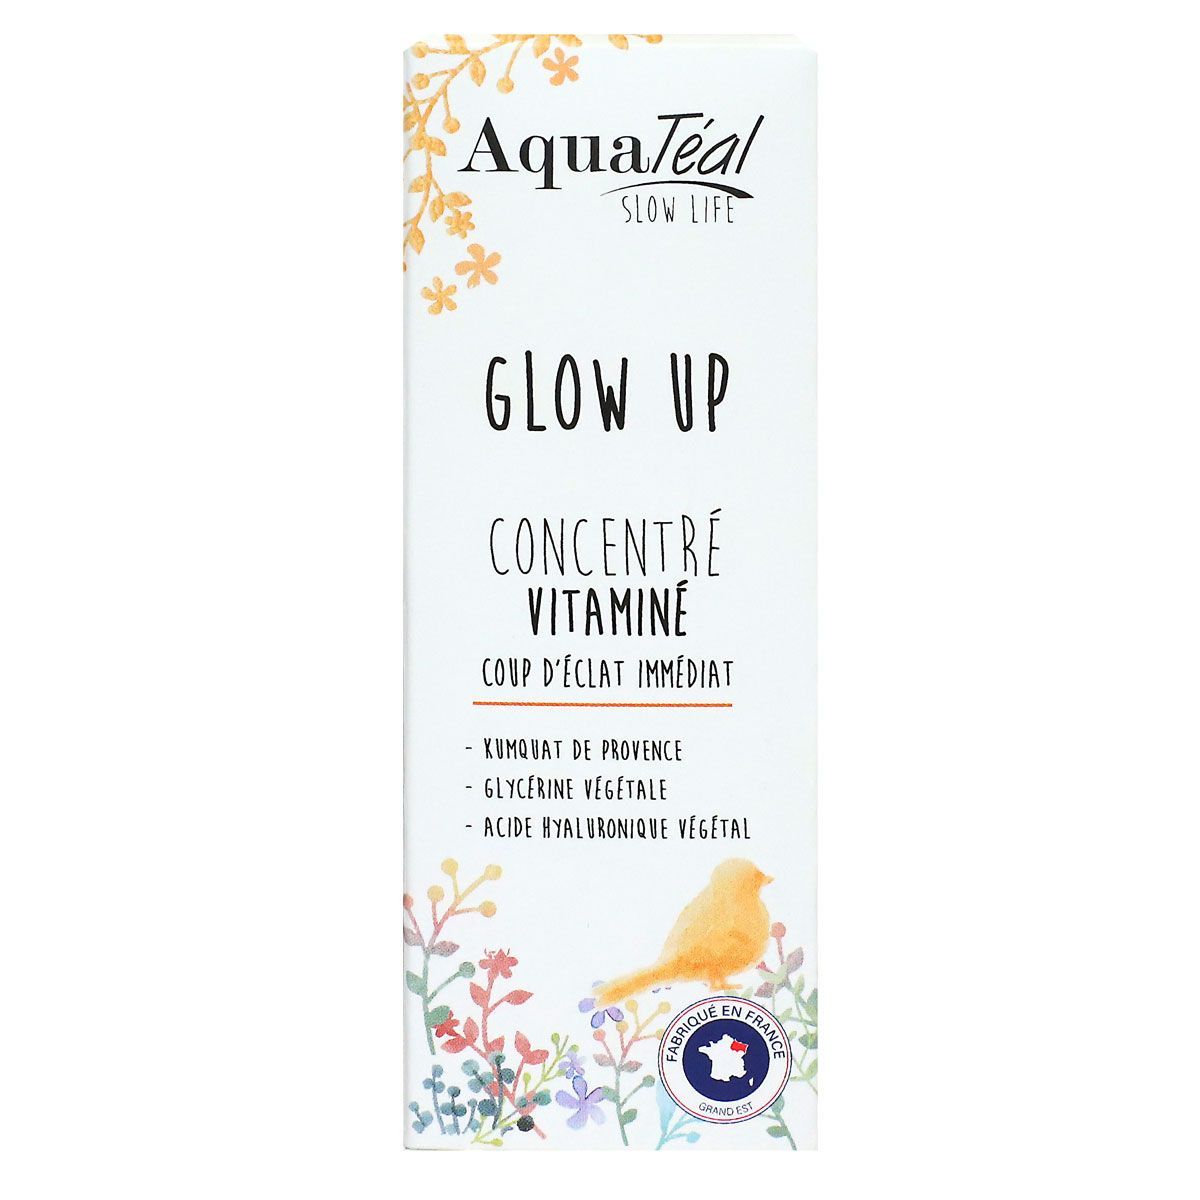 GLOW UP Concentré Visage vitaminé - 30 ml | Aquateal-Slow Life